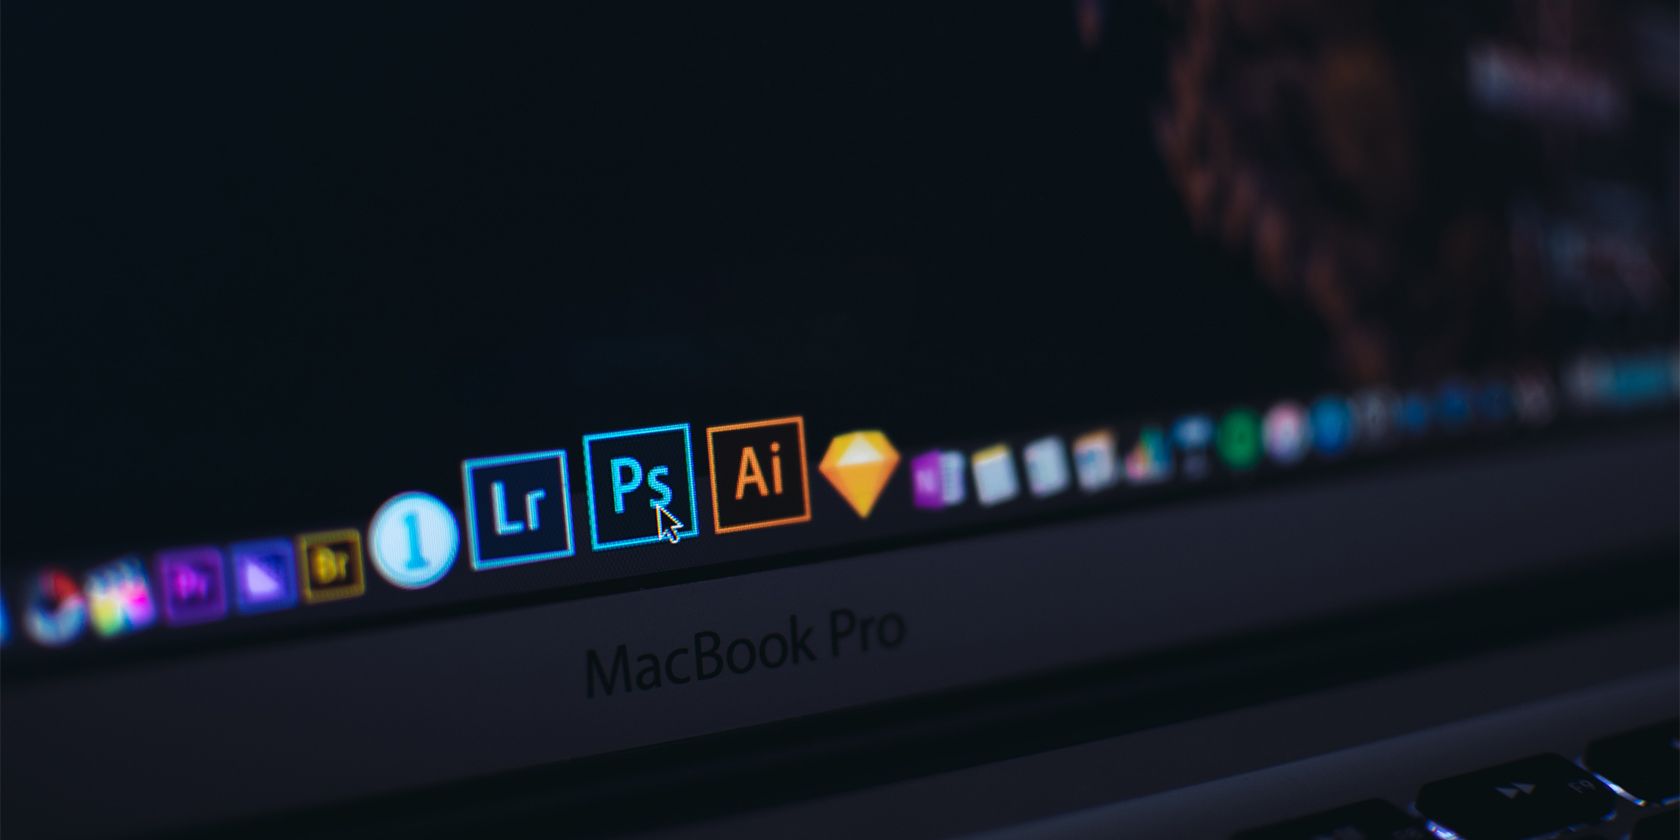 Adobe apps on a MacBook Pro